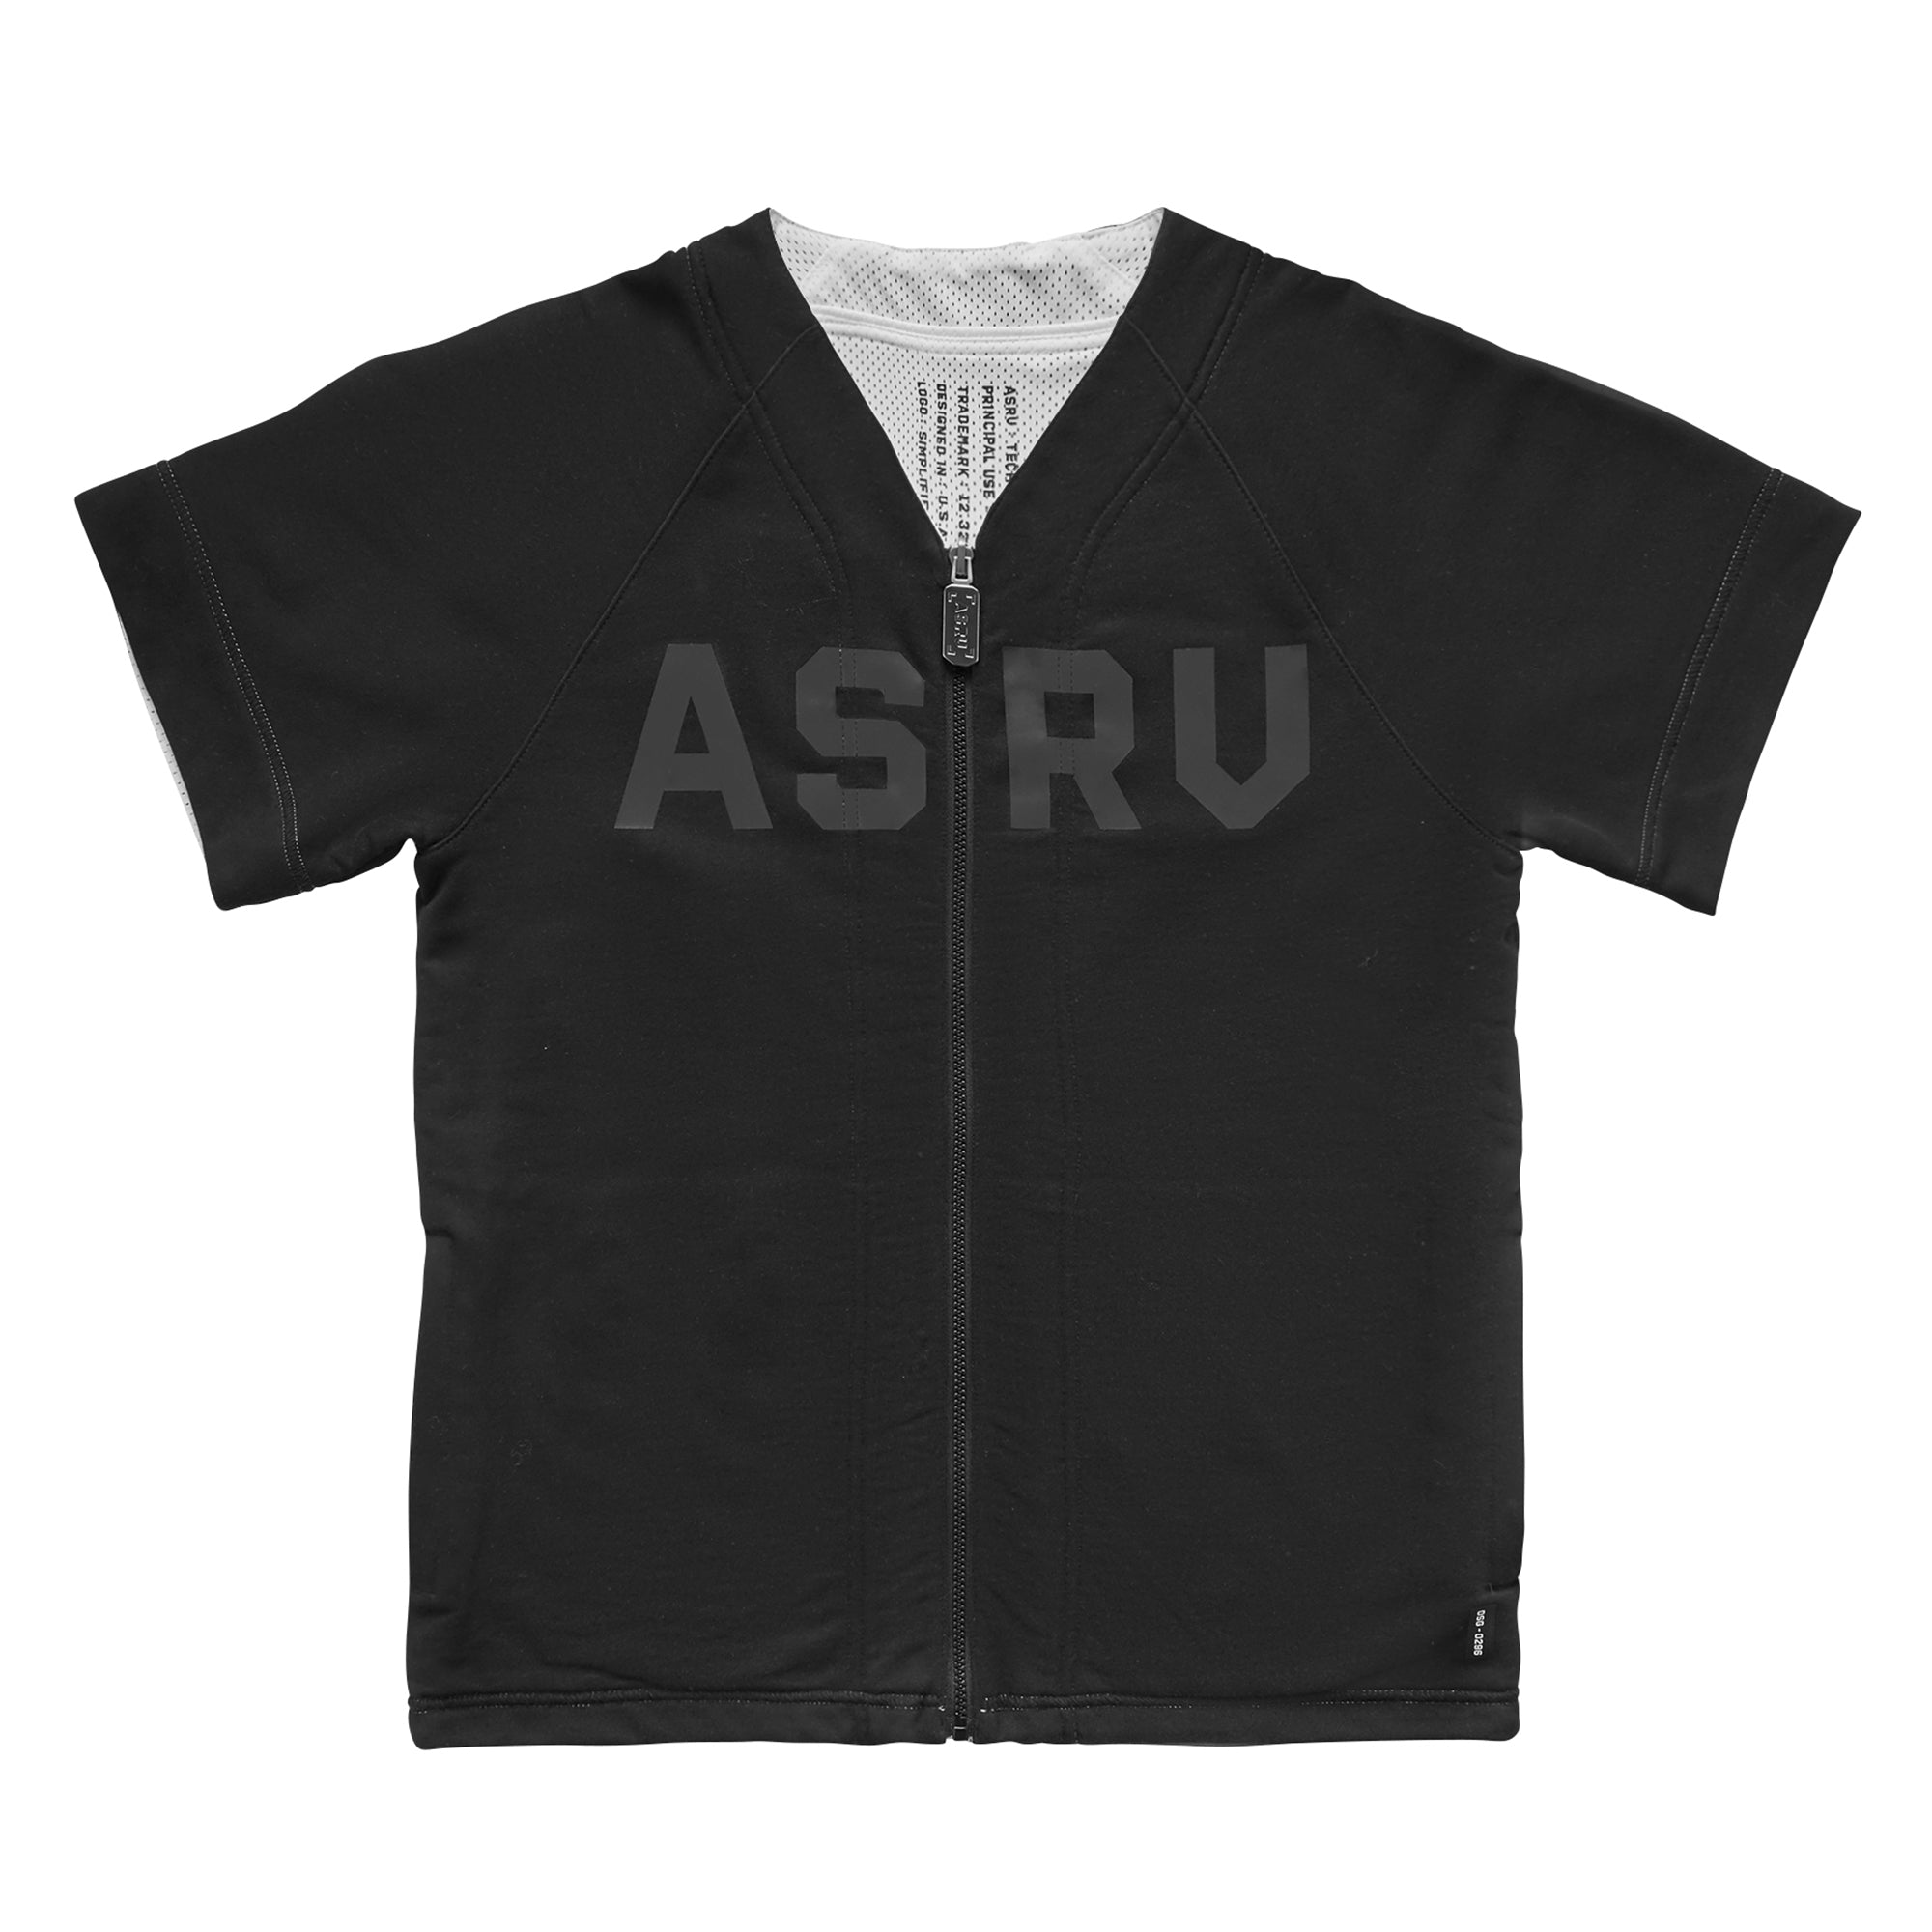 black and white baseball jersey